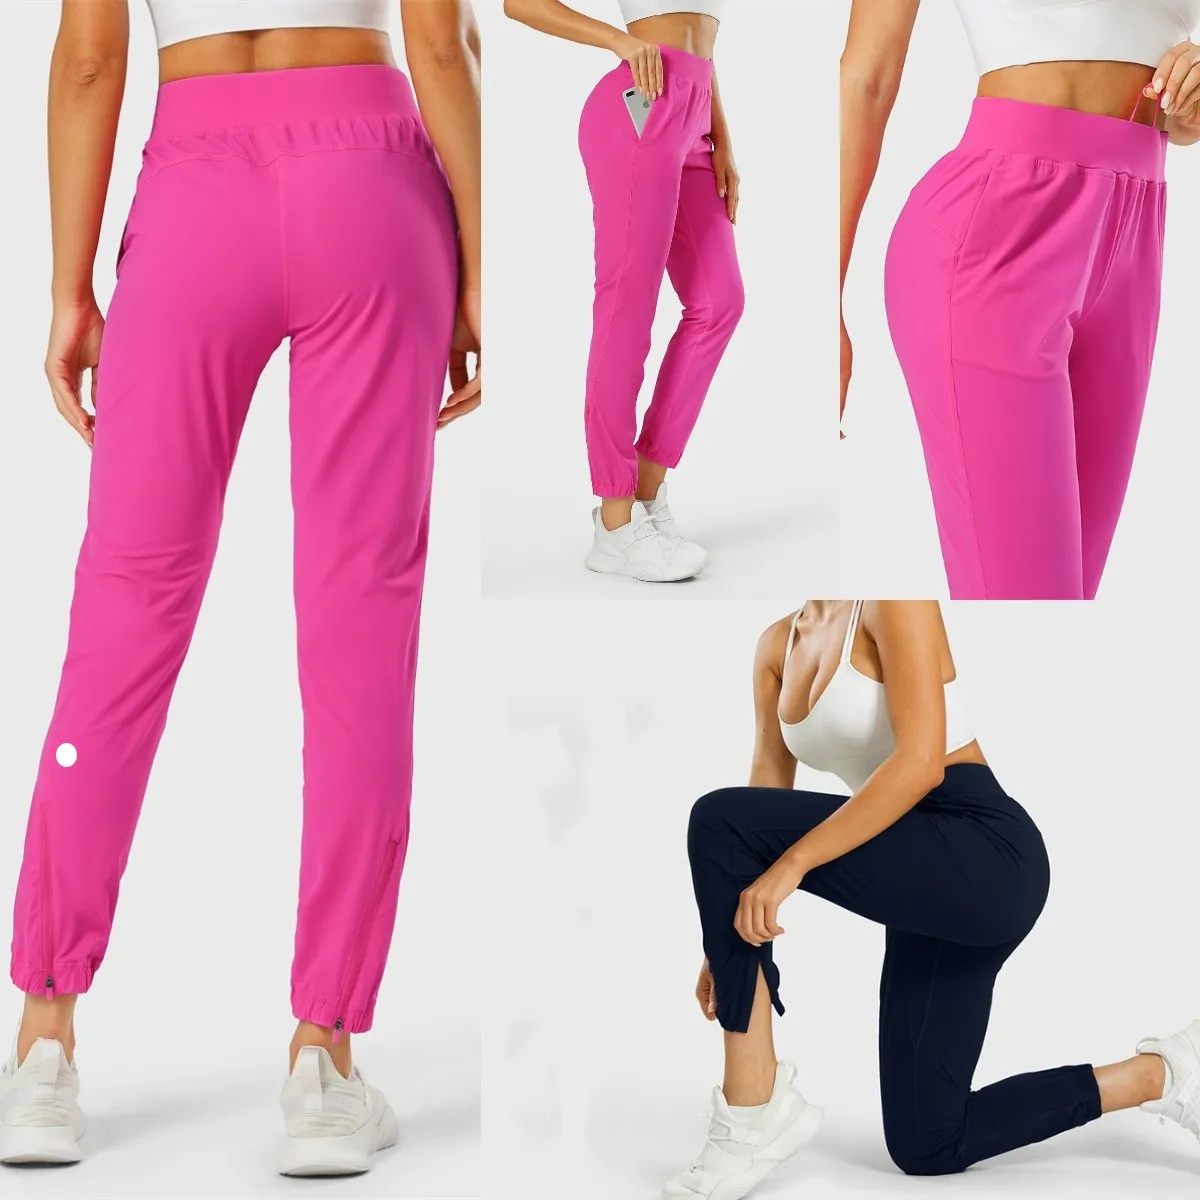 LU-1028 Damen-Yoga-Kleidung, Mädchen-Jogginghose, angepasster Zustand, dehnbar, hohe Taille, Trainingsgurt, GYM-Hose